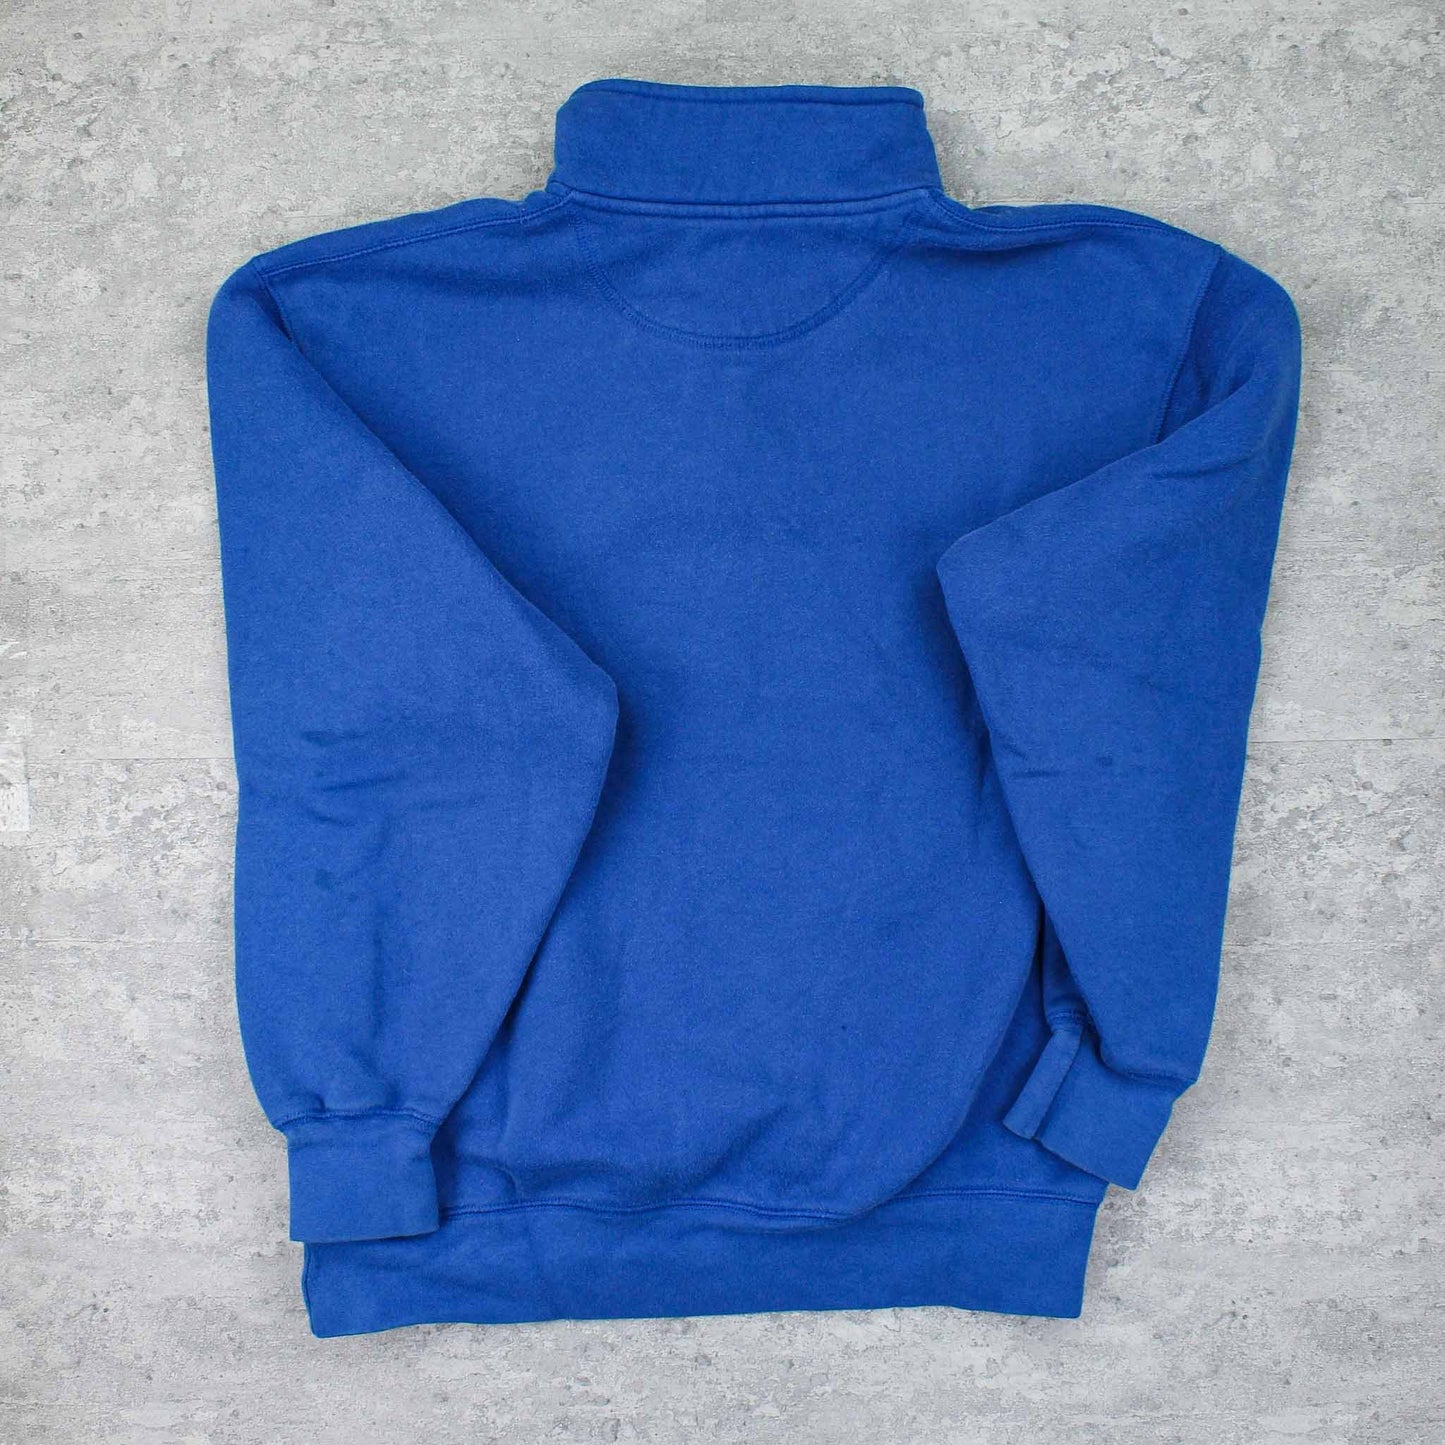 Vintage USA Spellout Zip-Up Sweater Blau - M